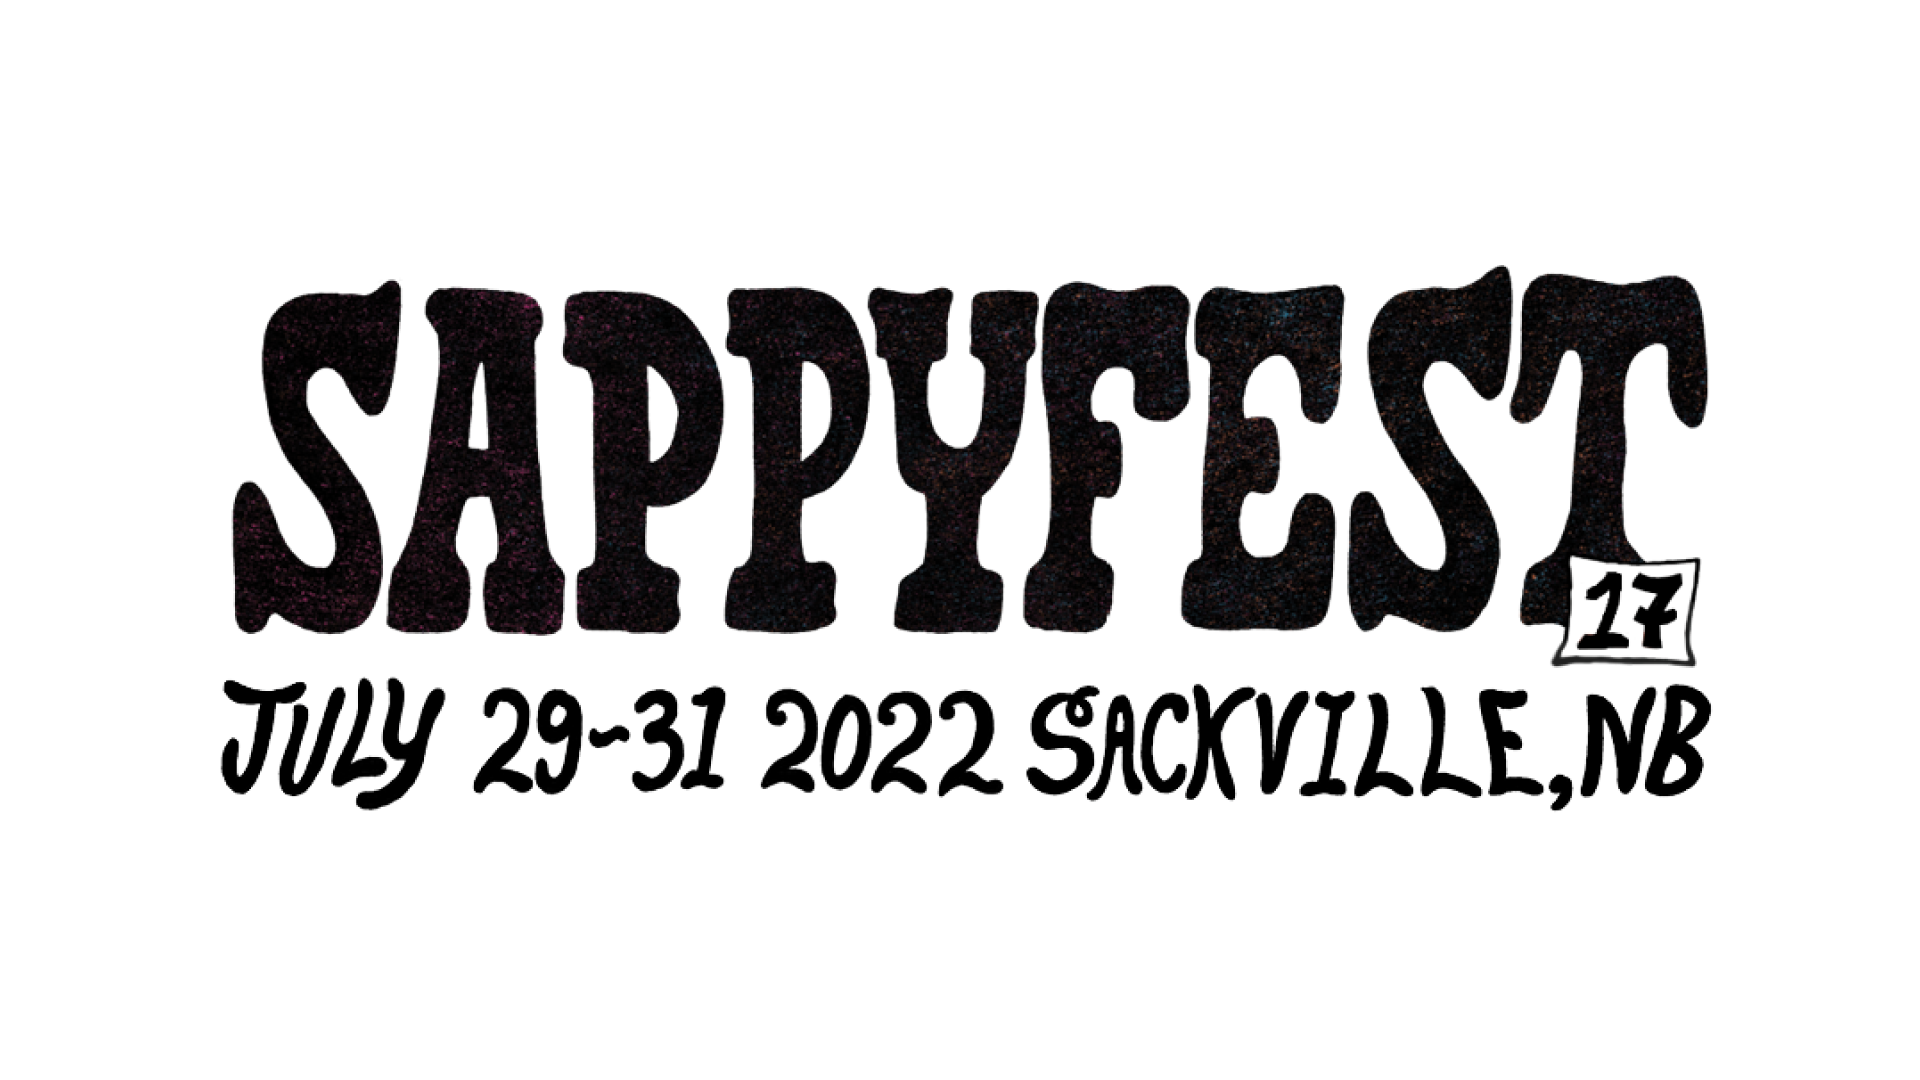 Sappyfest Logo